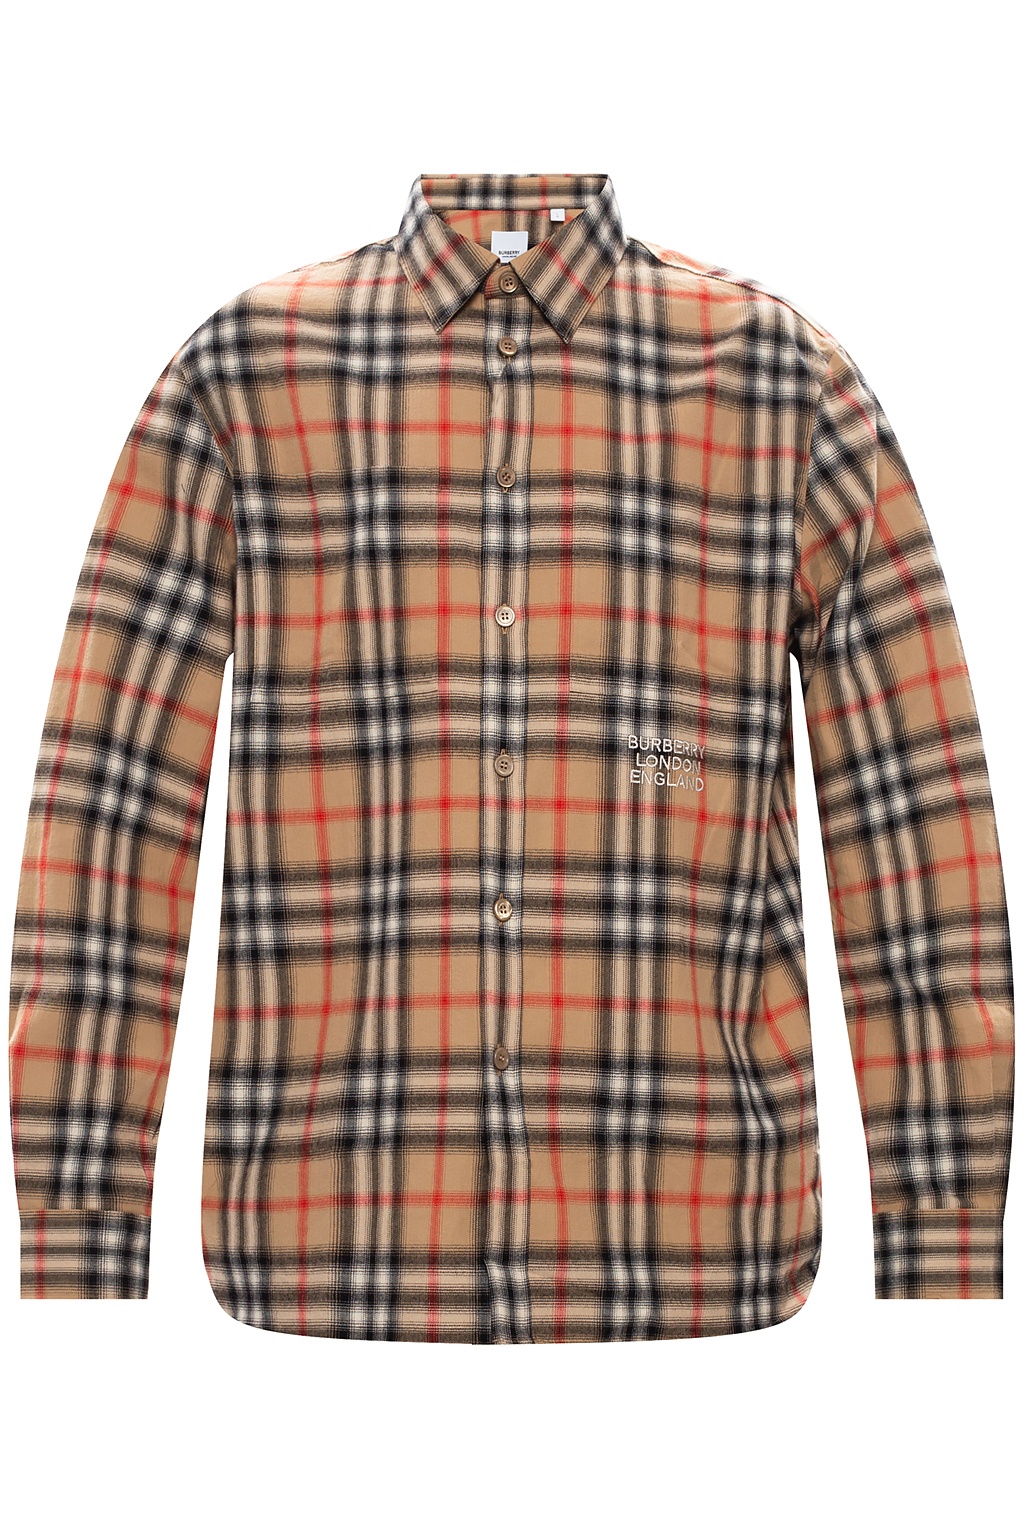 Burberry Shirt with logo | Men's Clothing | Vitkac